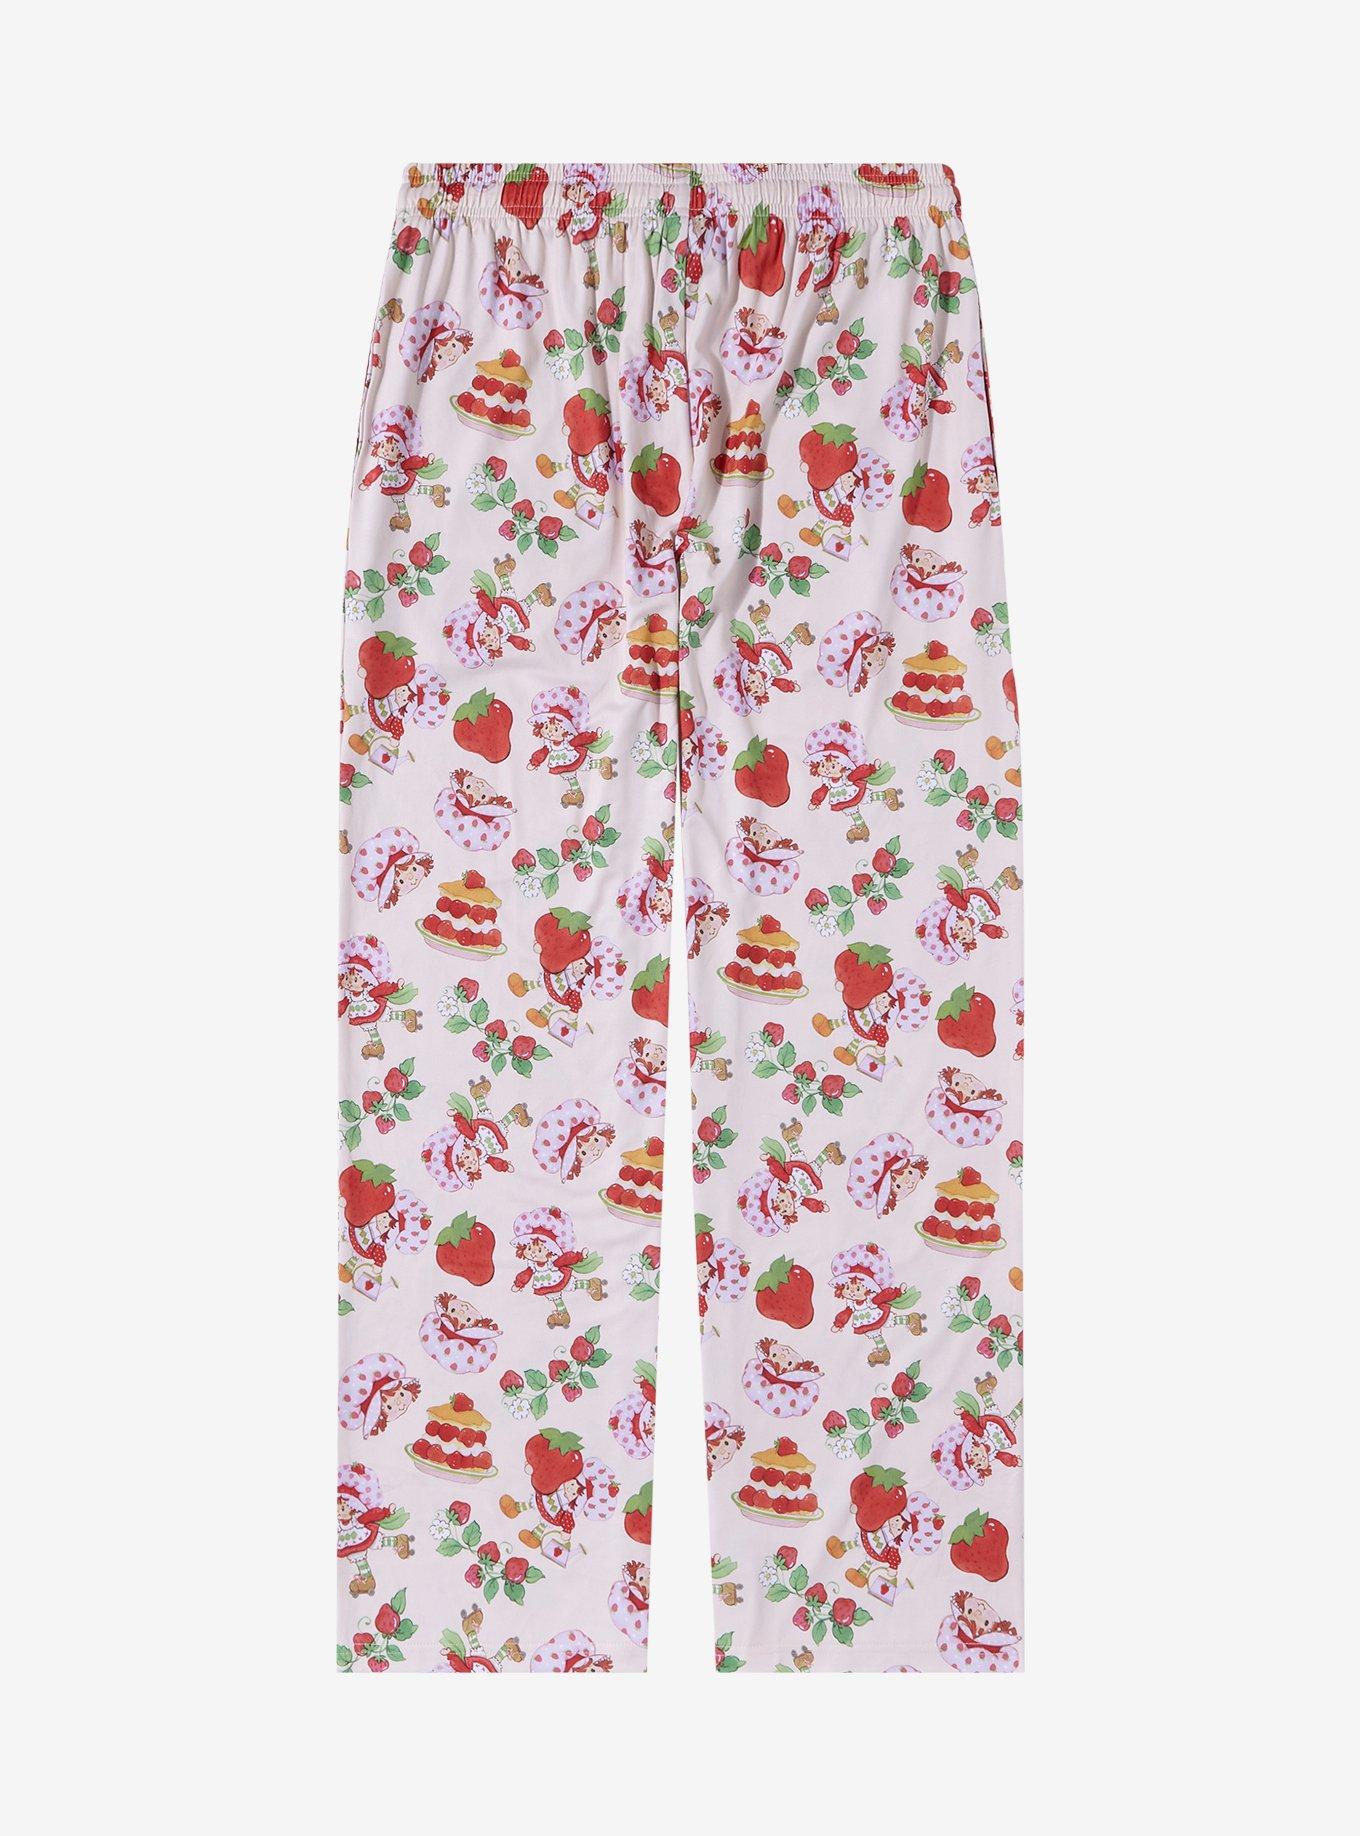 Strawberry Shortcake Icons Allover Print Sleep Pants - BoxLunch Exclusive, CREAM, alternate